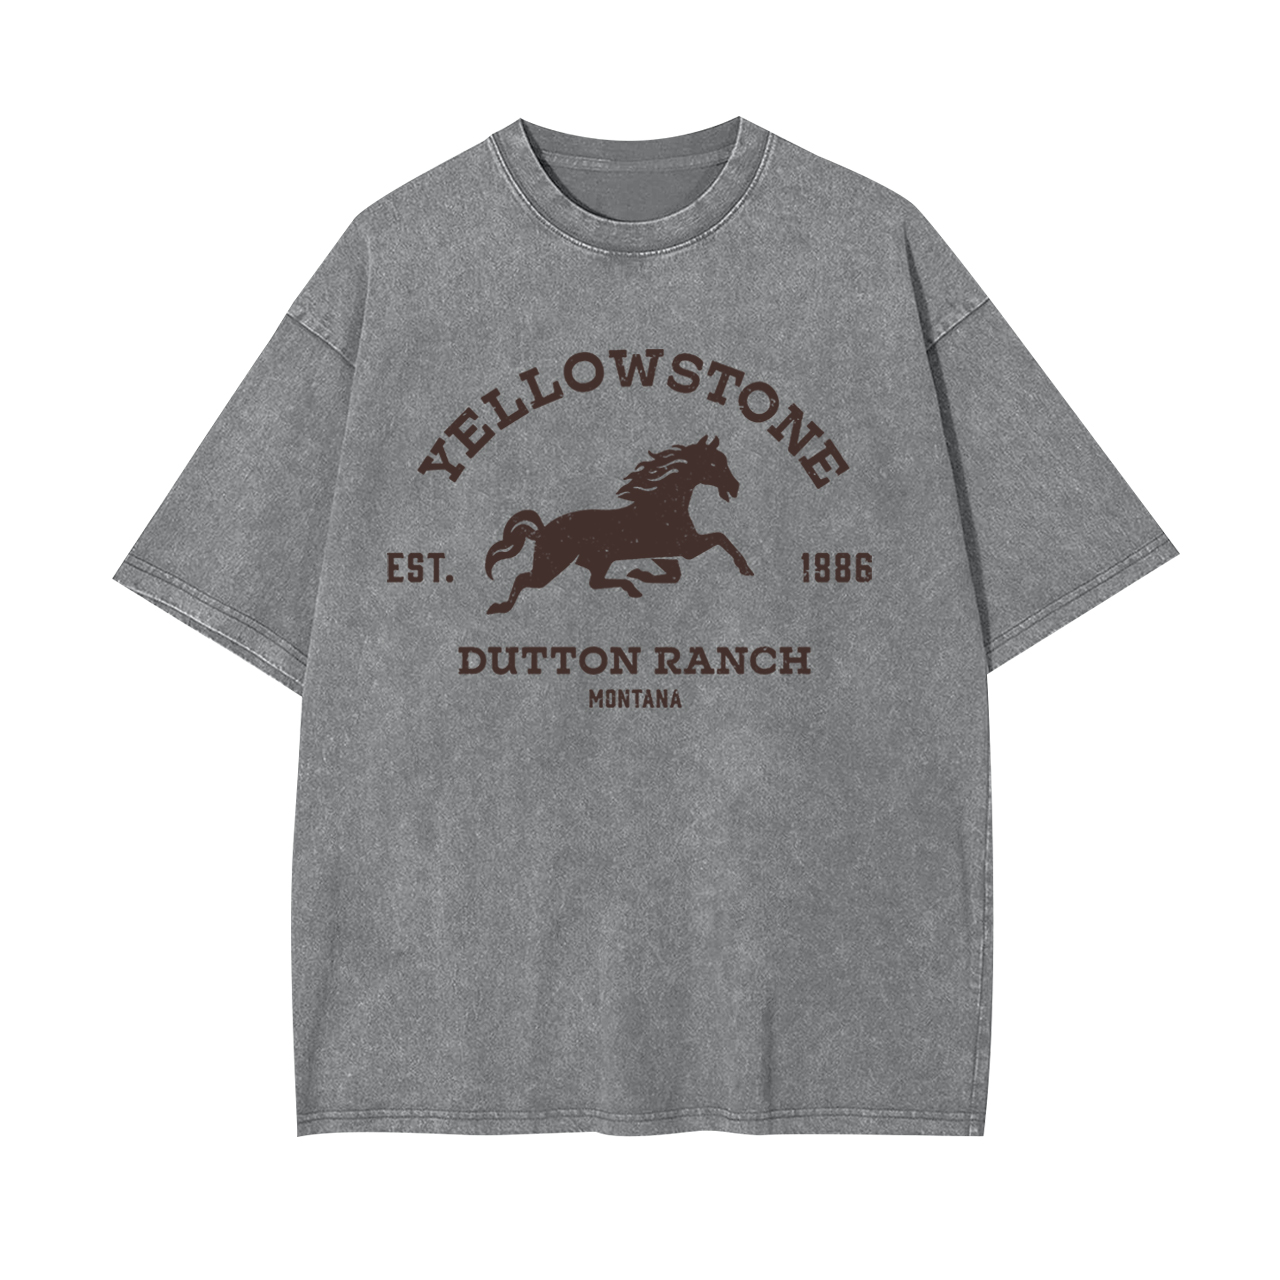 Yellowstone National Park Dutton Ranch Garment-dye Tees